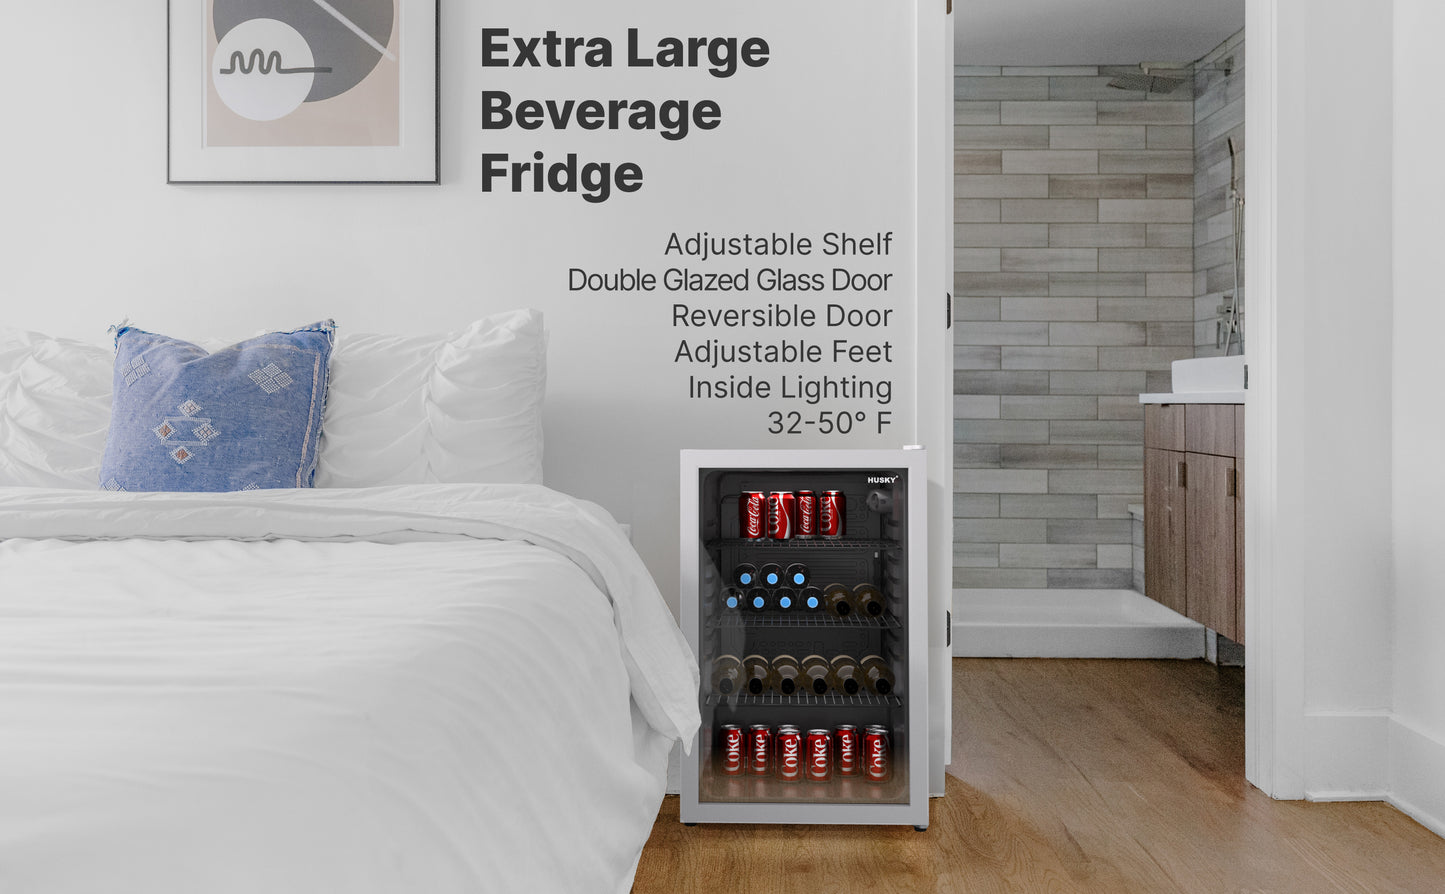 Husky 131L Beverage Refrigerator 4.6 C.ft. Freestanding Mini Fridge With Glass Door in White